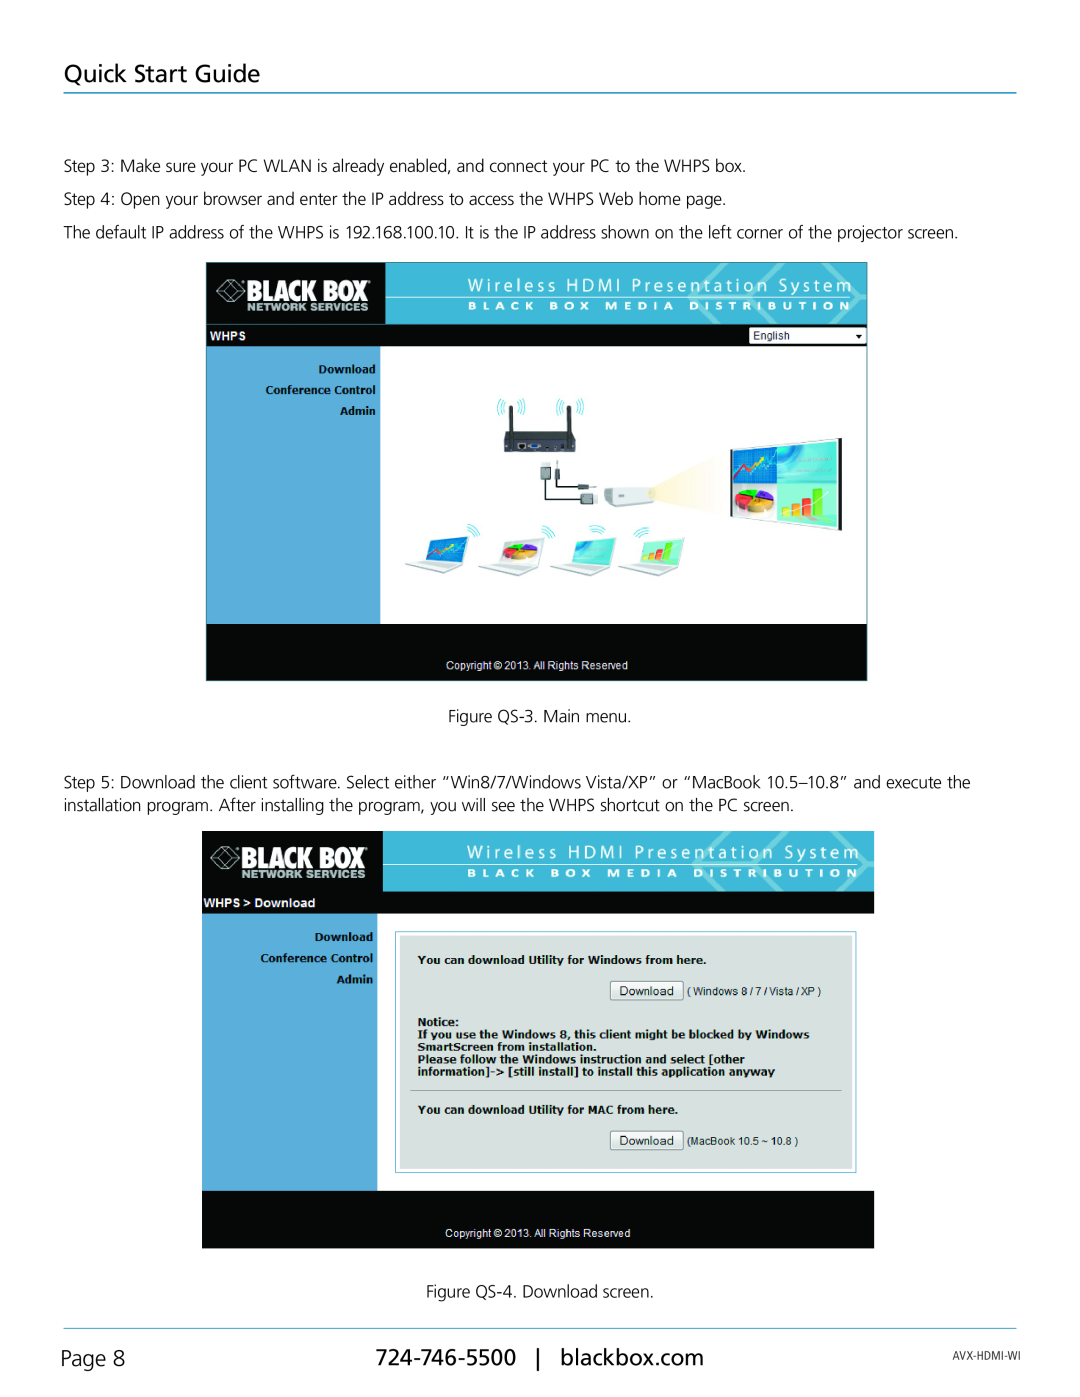 Black Box AVX-HDMI-WI, Wireless HDMI Presentation System (WHPS) manual Quick Start Guide, Page, Figure QS-3. Main menu 